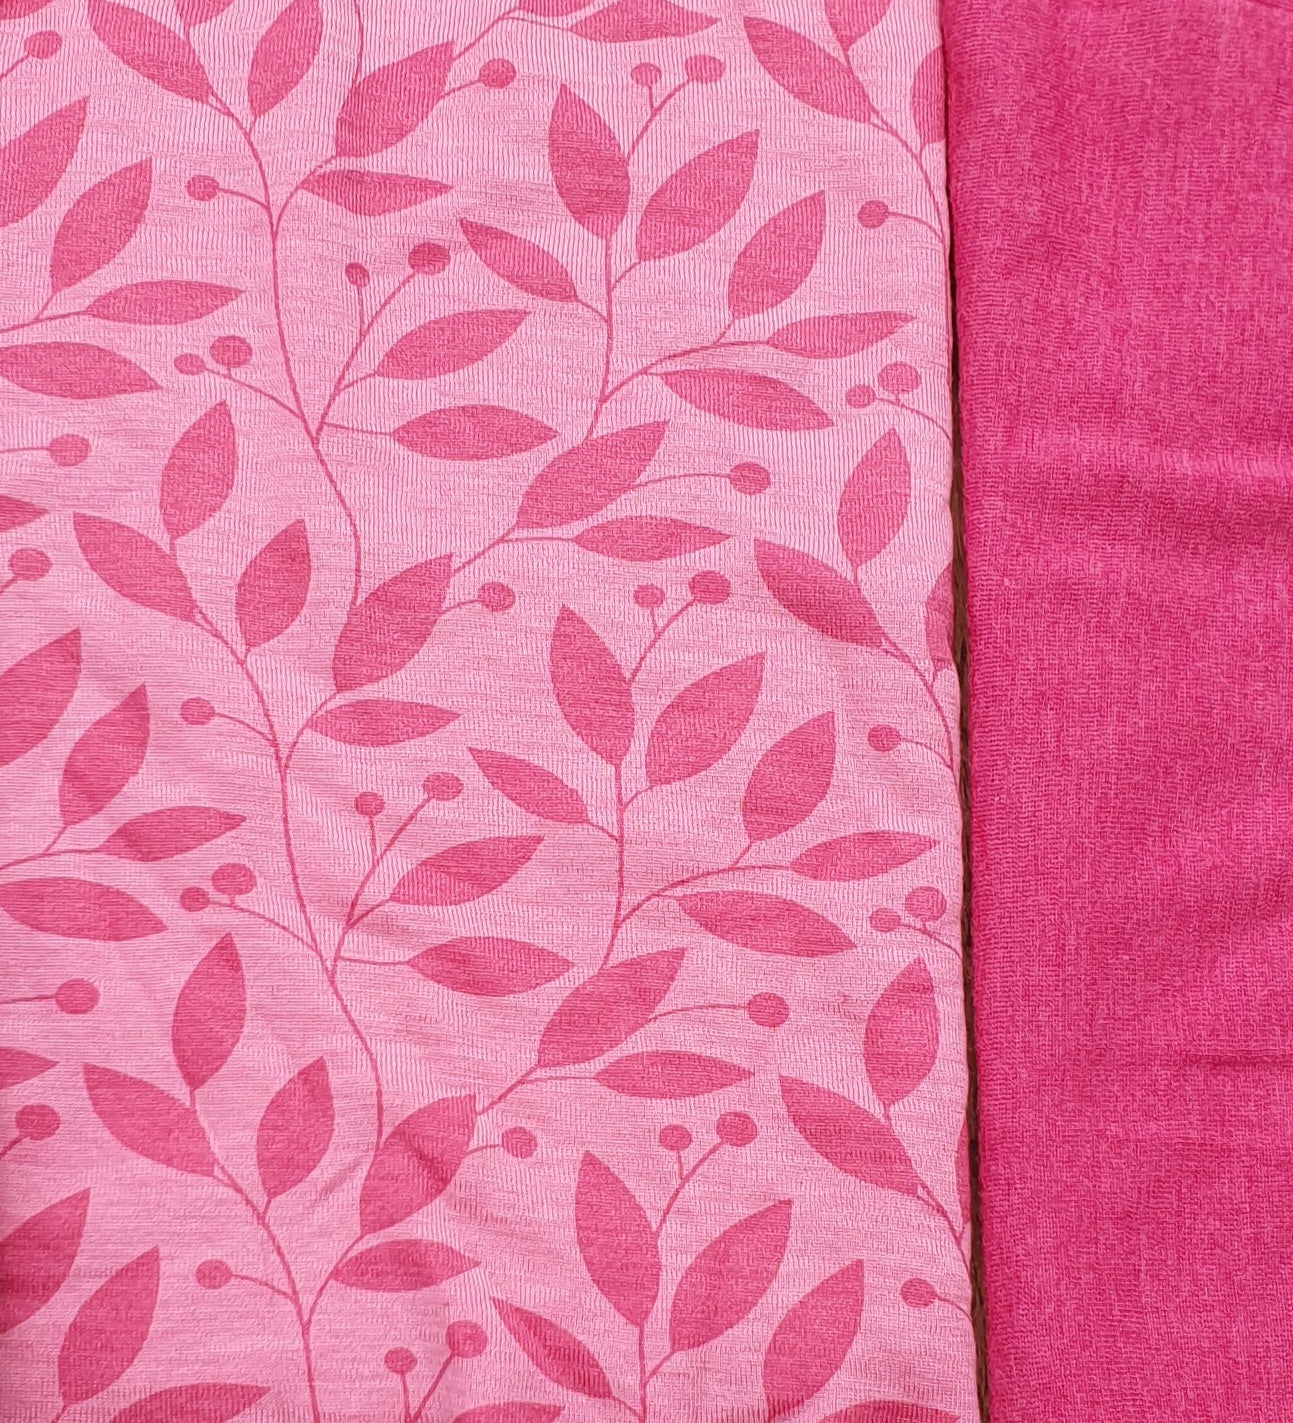 Sonnenhut Add-On Muster auf rosa, lila, pink